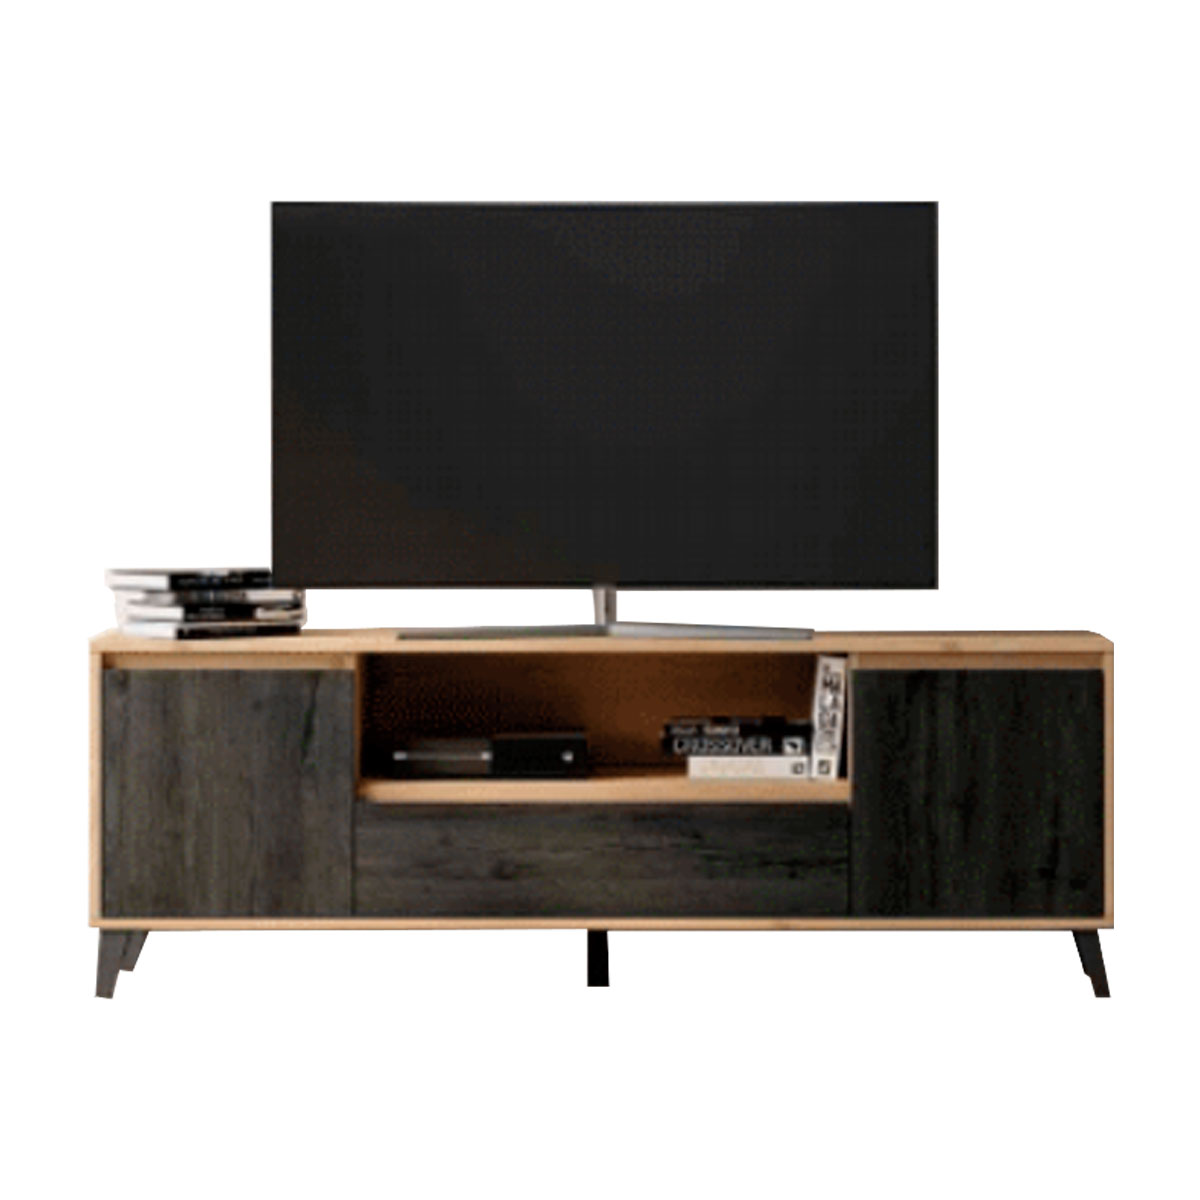 Mueble TV roble pata metálica negra- Comprar mueble TV - Artikalia